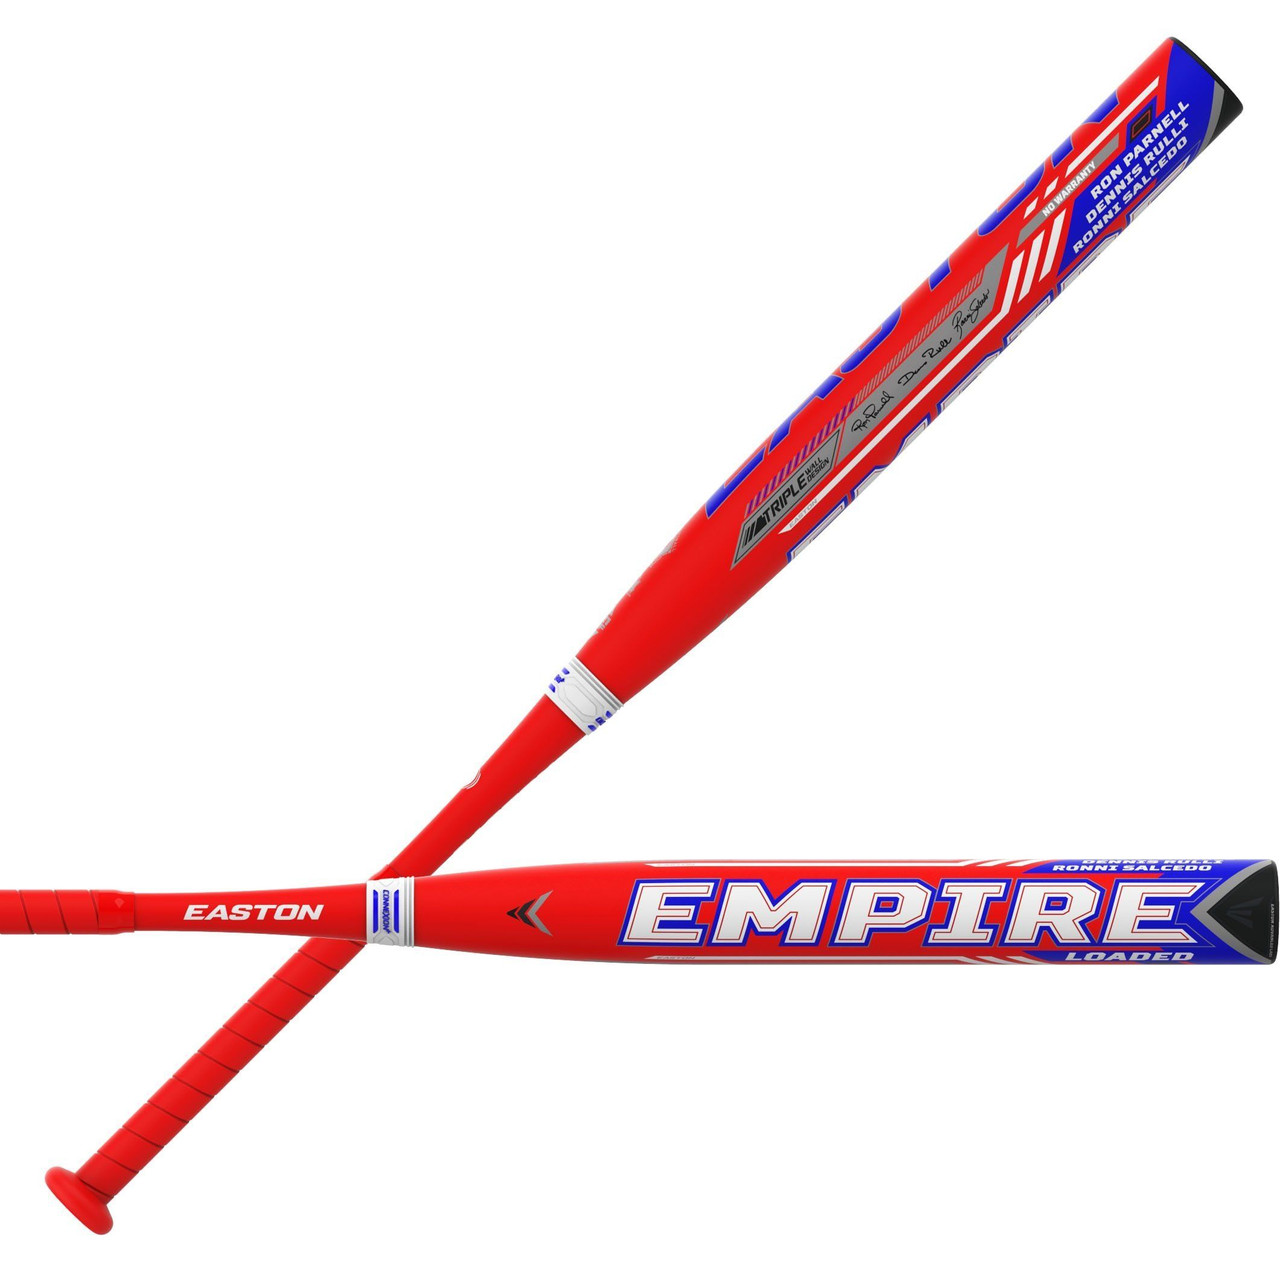 fin chargé ssusa 2020 Easton Empire triple R 2PC slowpitch Softball Bat 13.75 